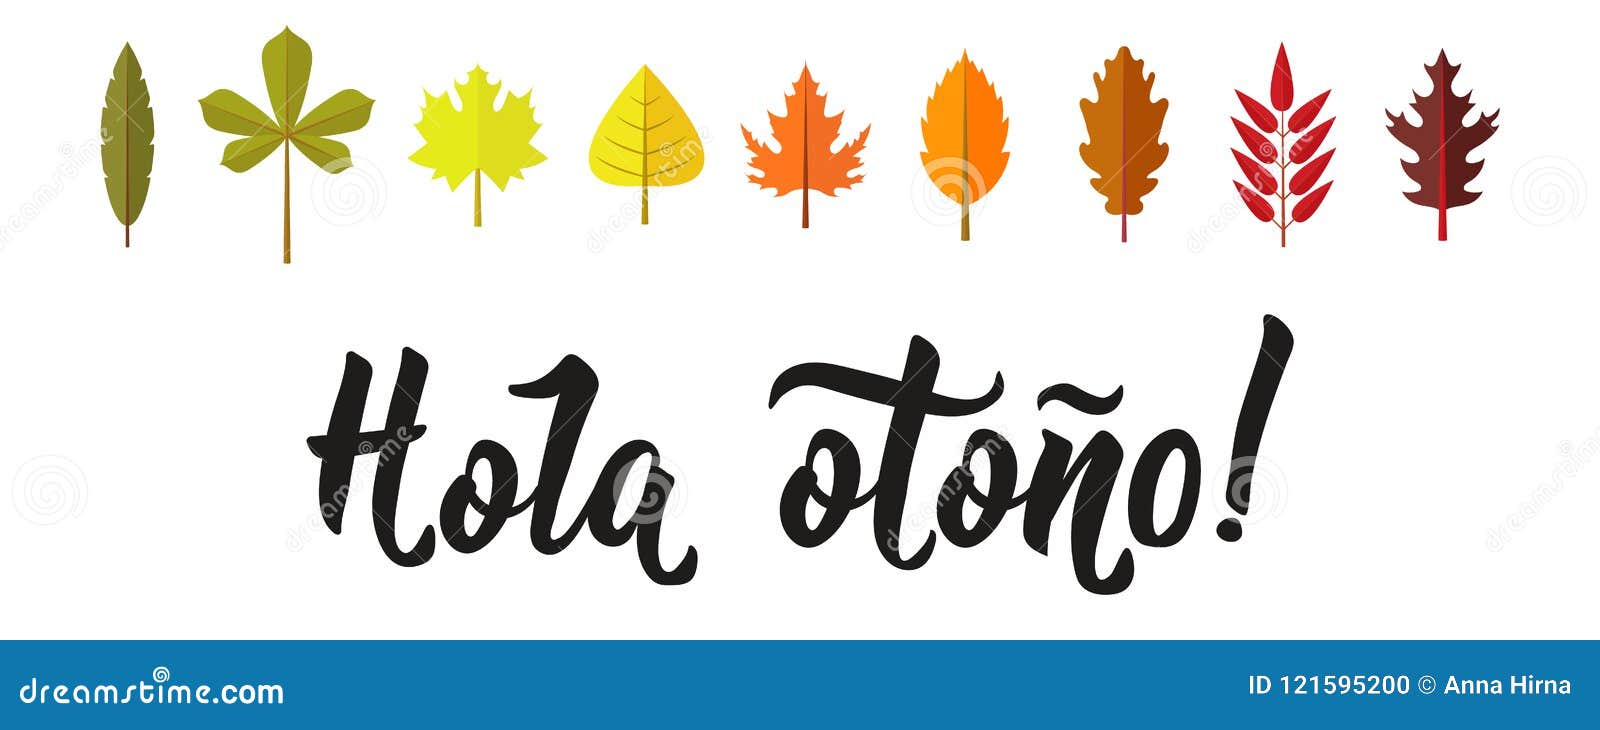 hola otono lettering. spanish translation: hello autumn. calligraphy  .